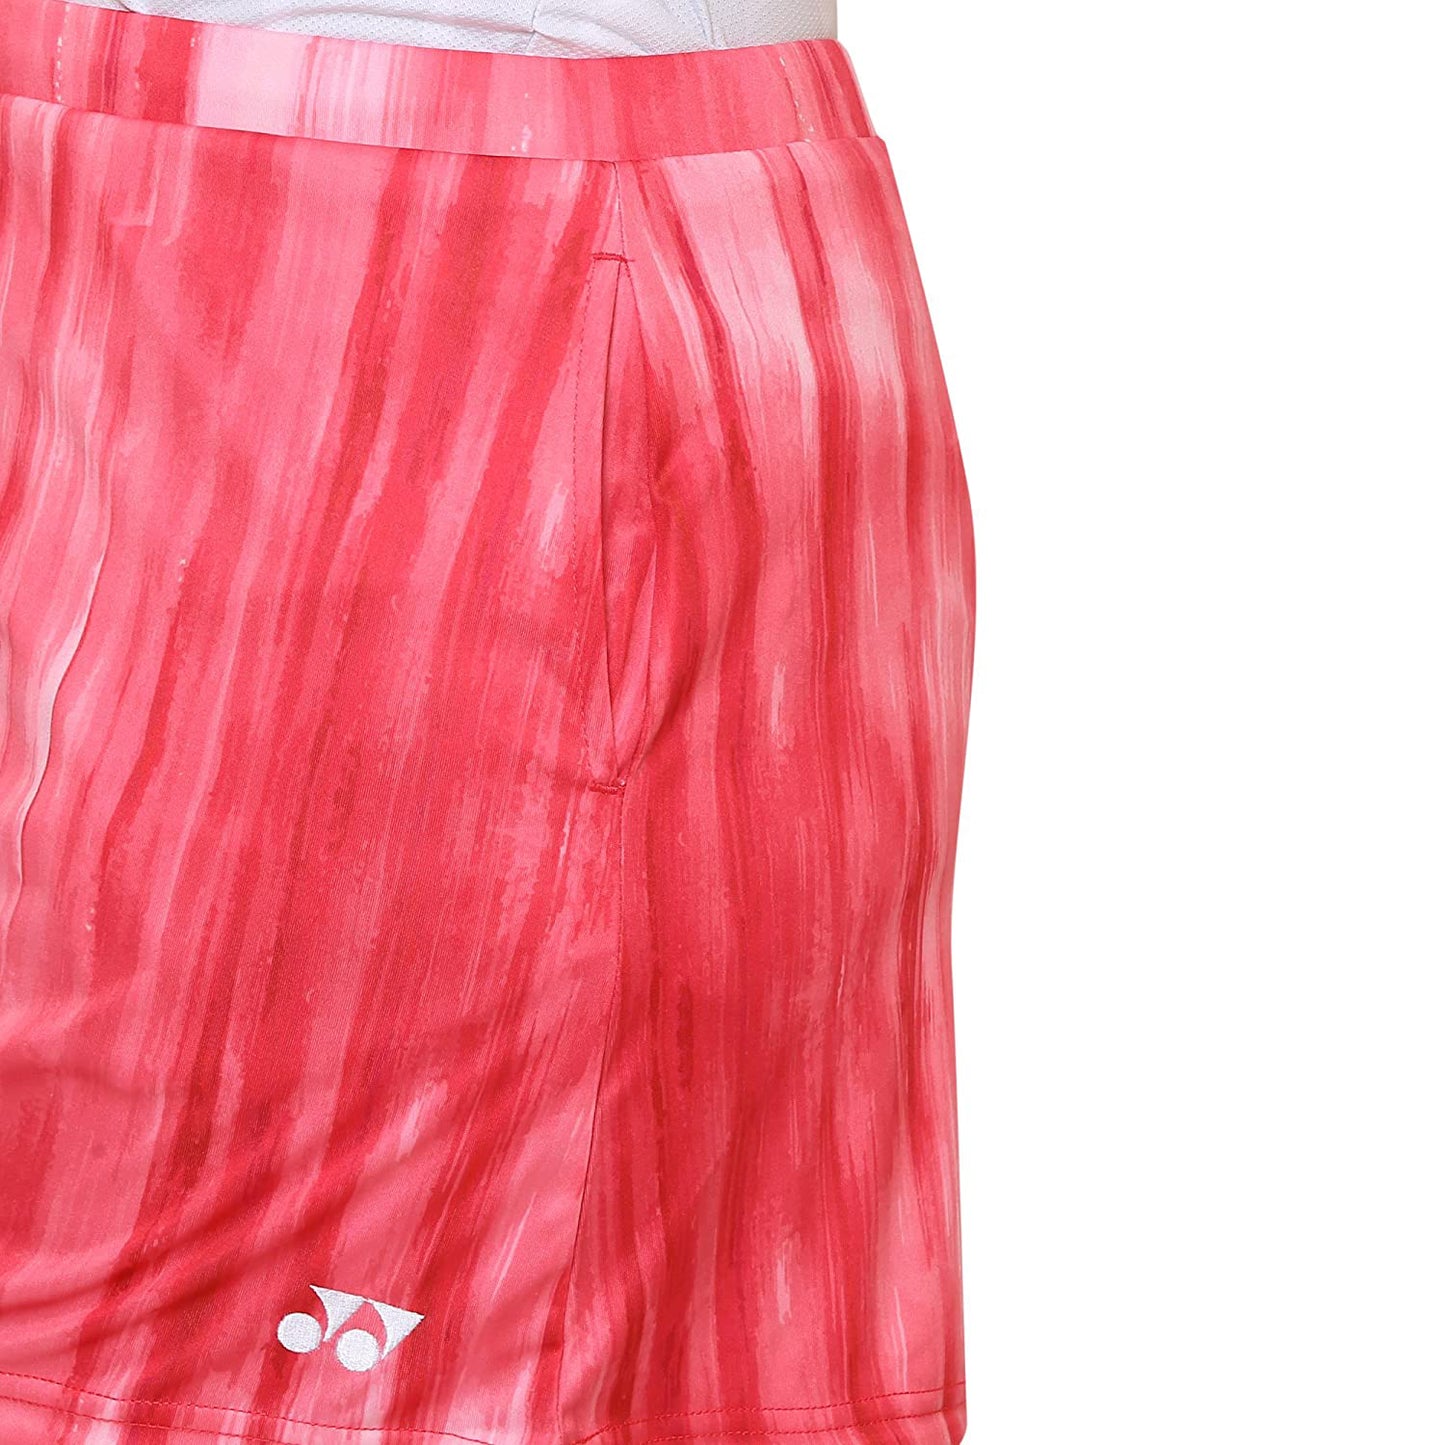 Yonex 905 Skirt for Women, Raspberry - Best Price online Prokicksports.com